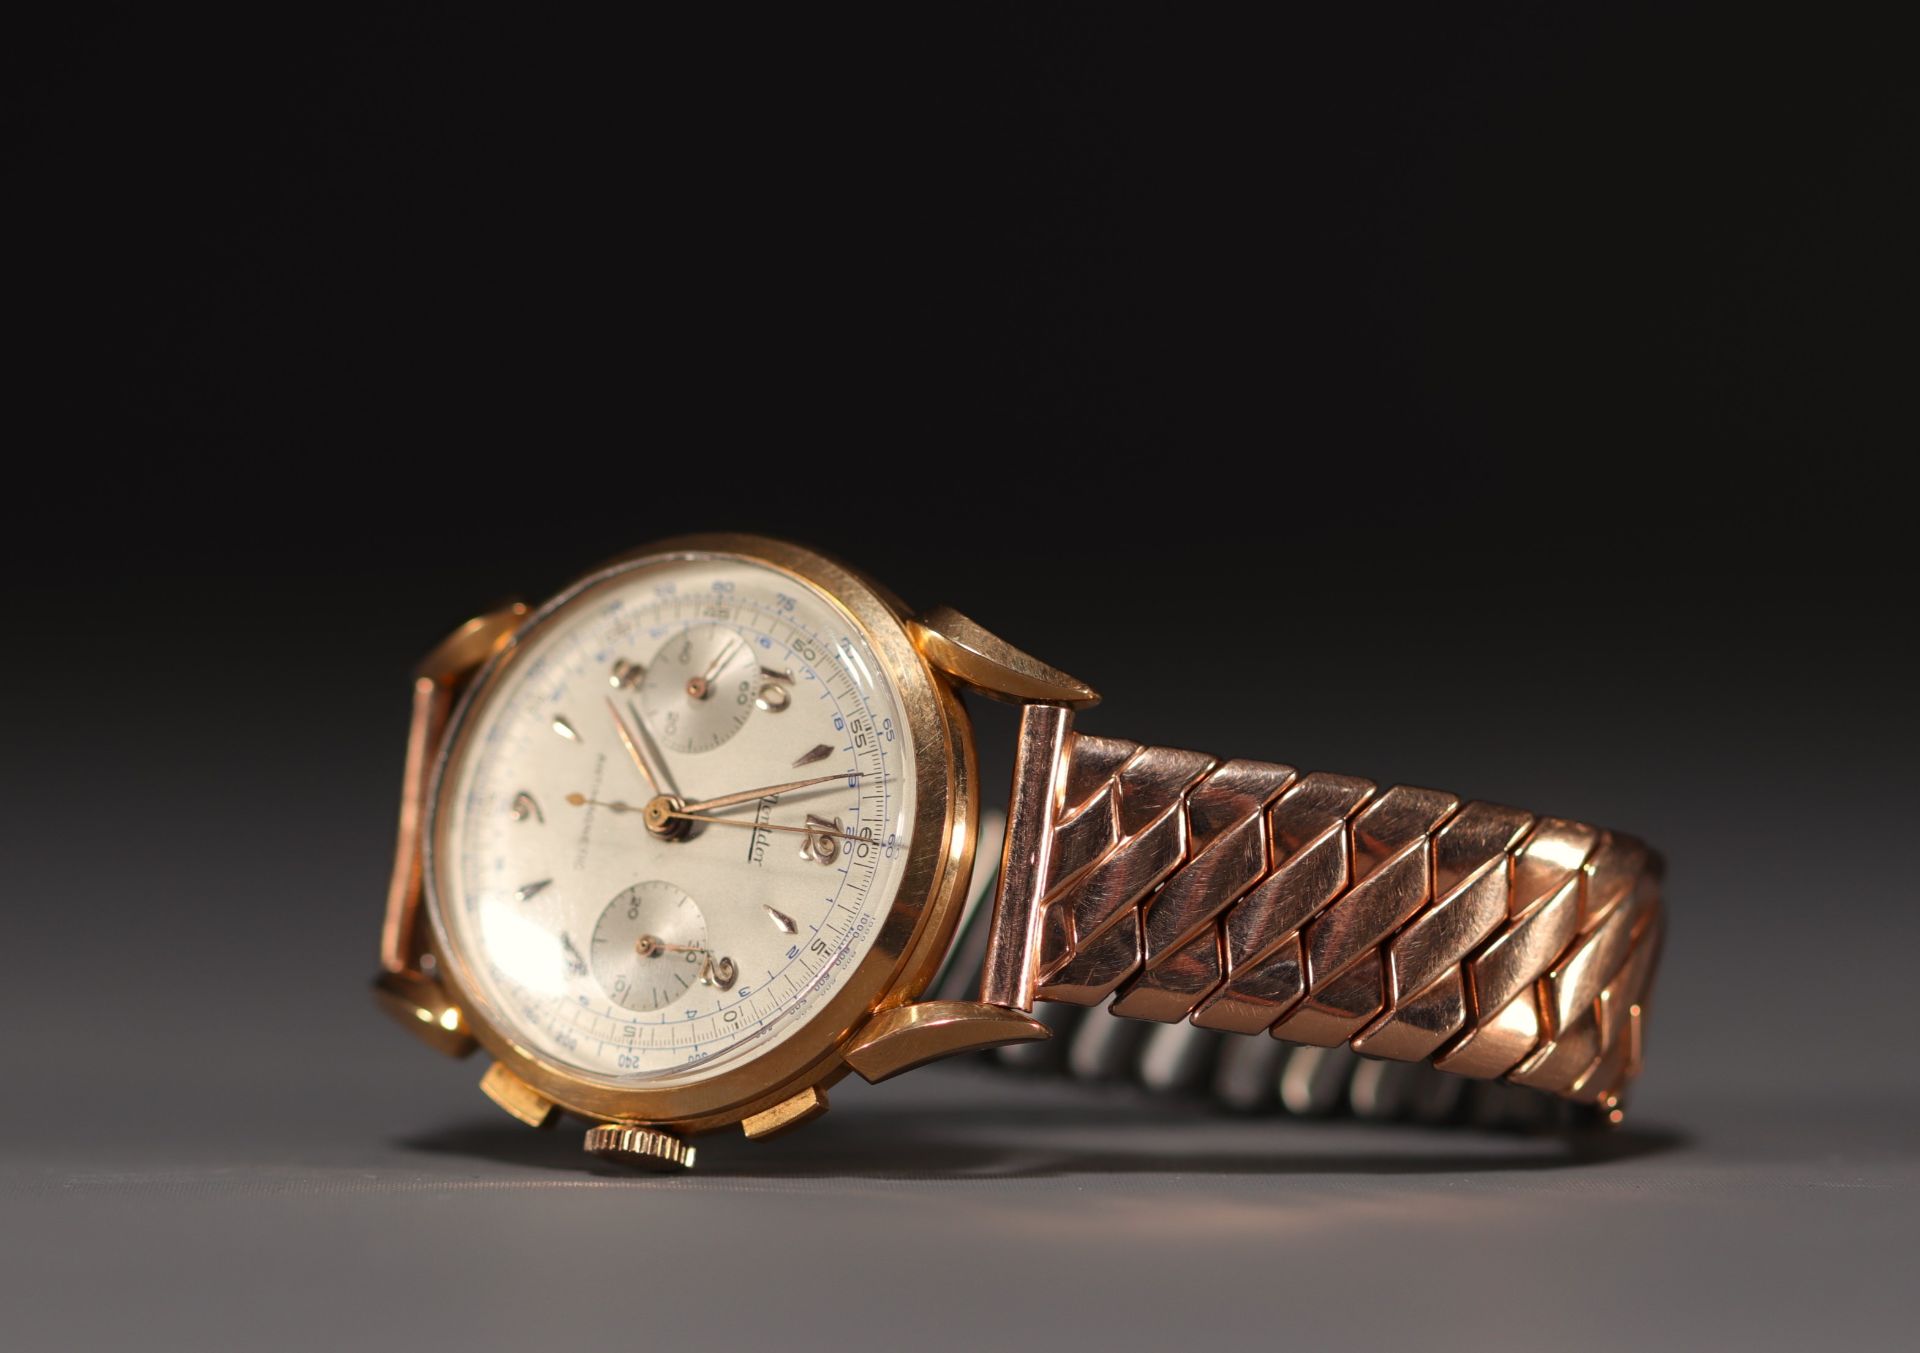 Mondor - "Doctors" Mechanical chronograph watch, complete case in 18k gold, Switzerland circa 1950. - Bild 2 aus 3